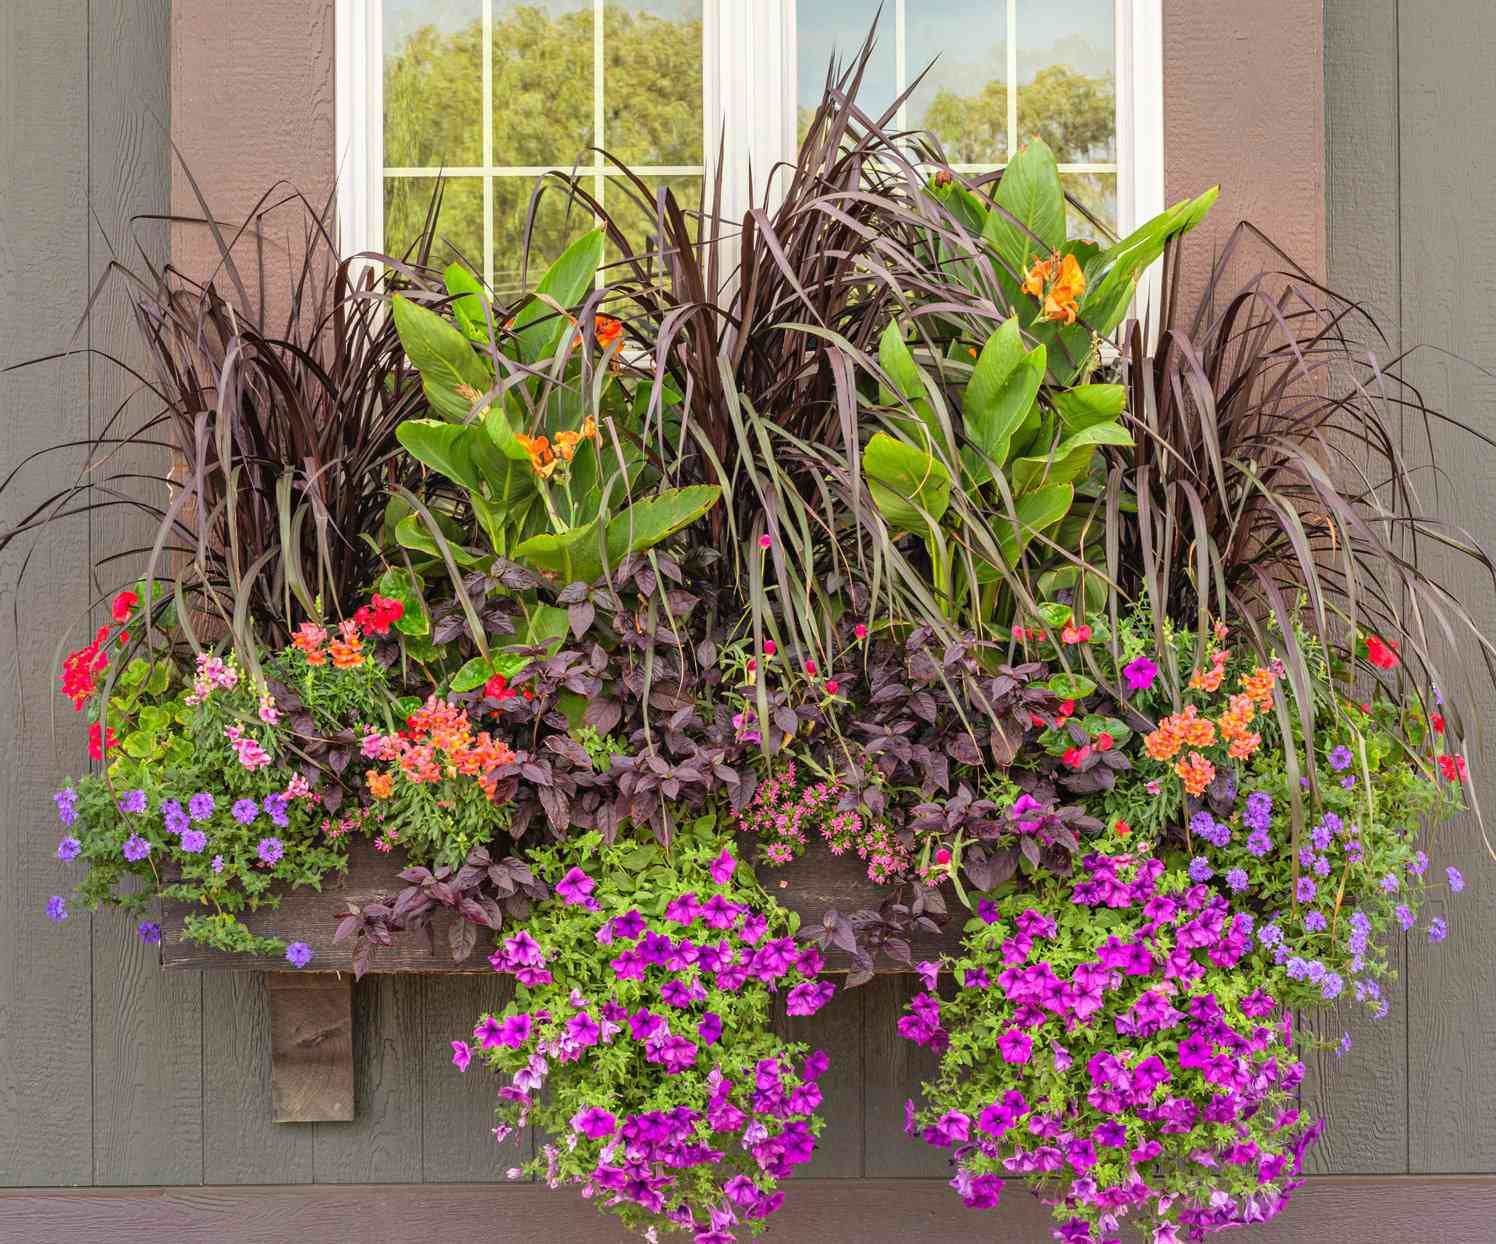 Expert Tips for Growing a Window Box Garden